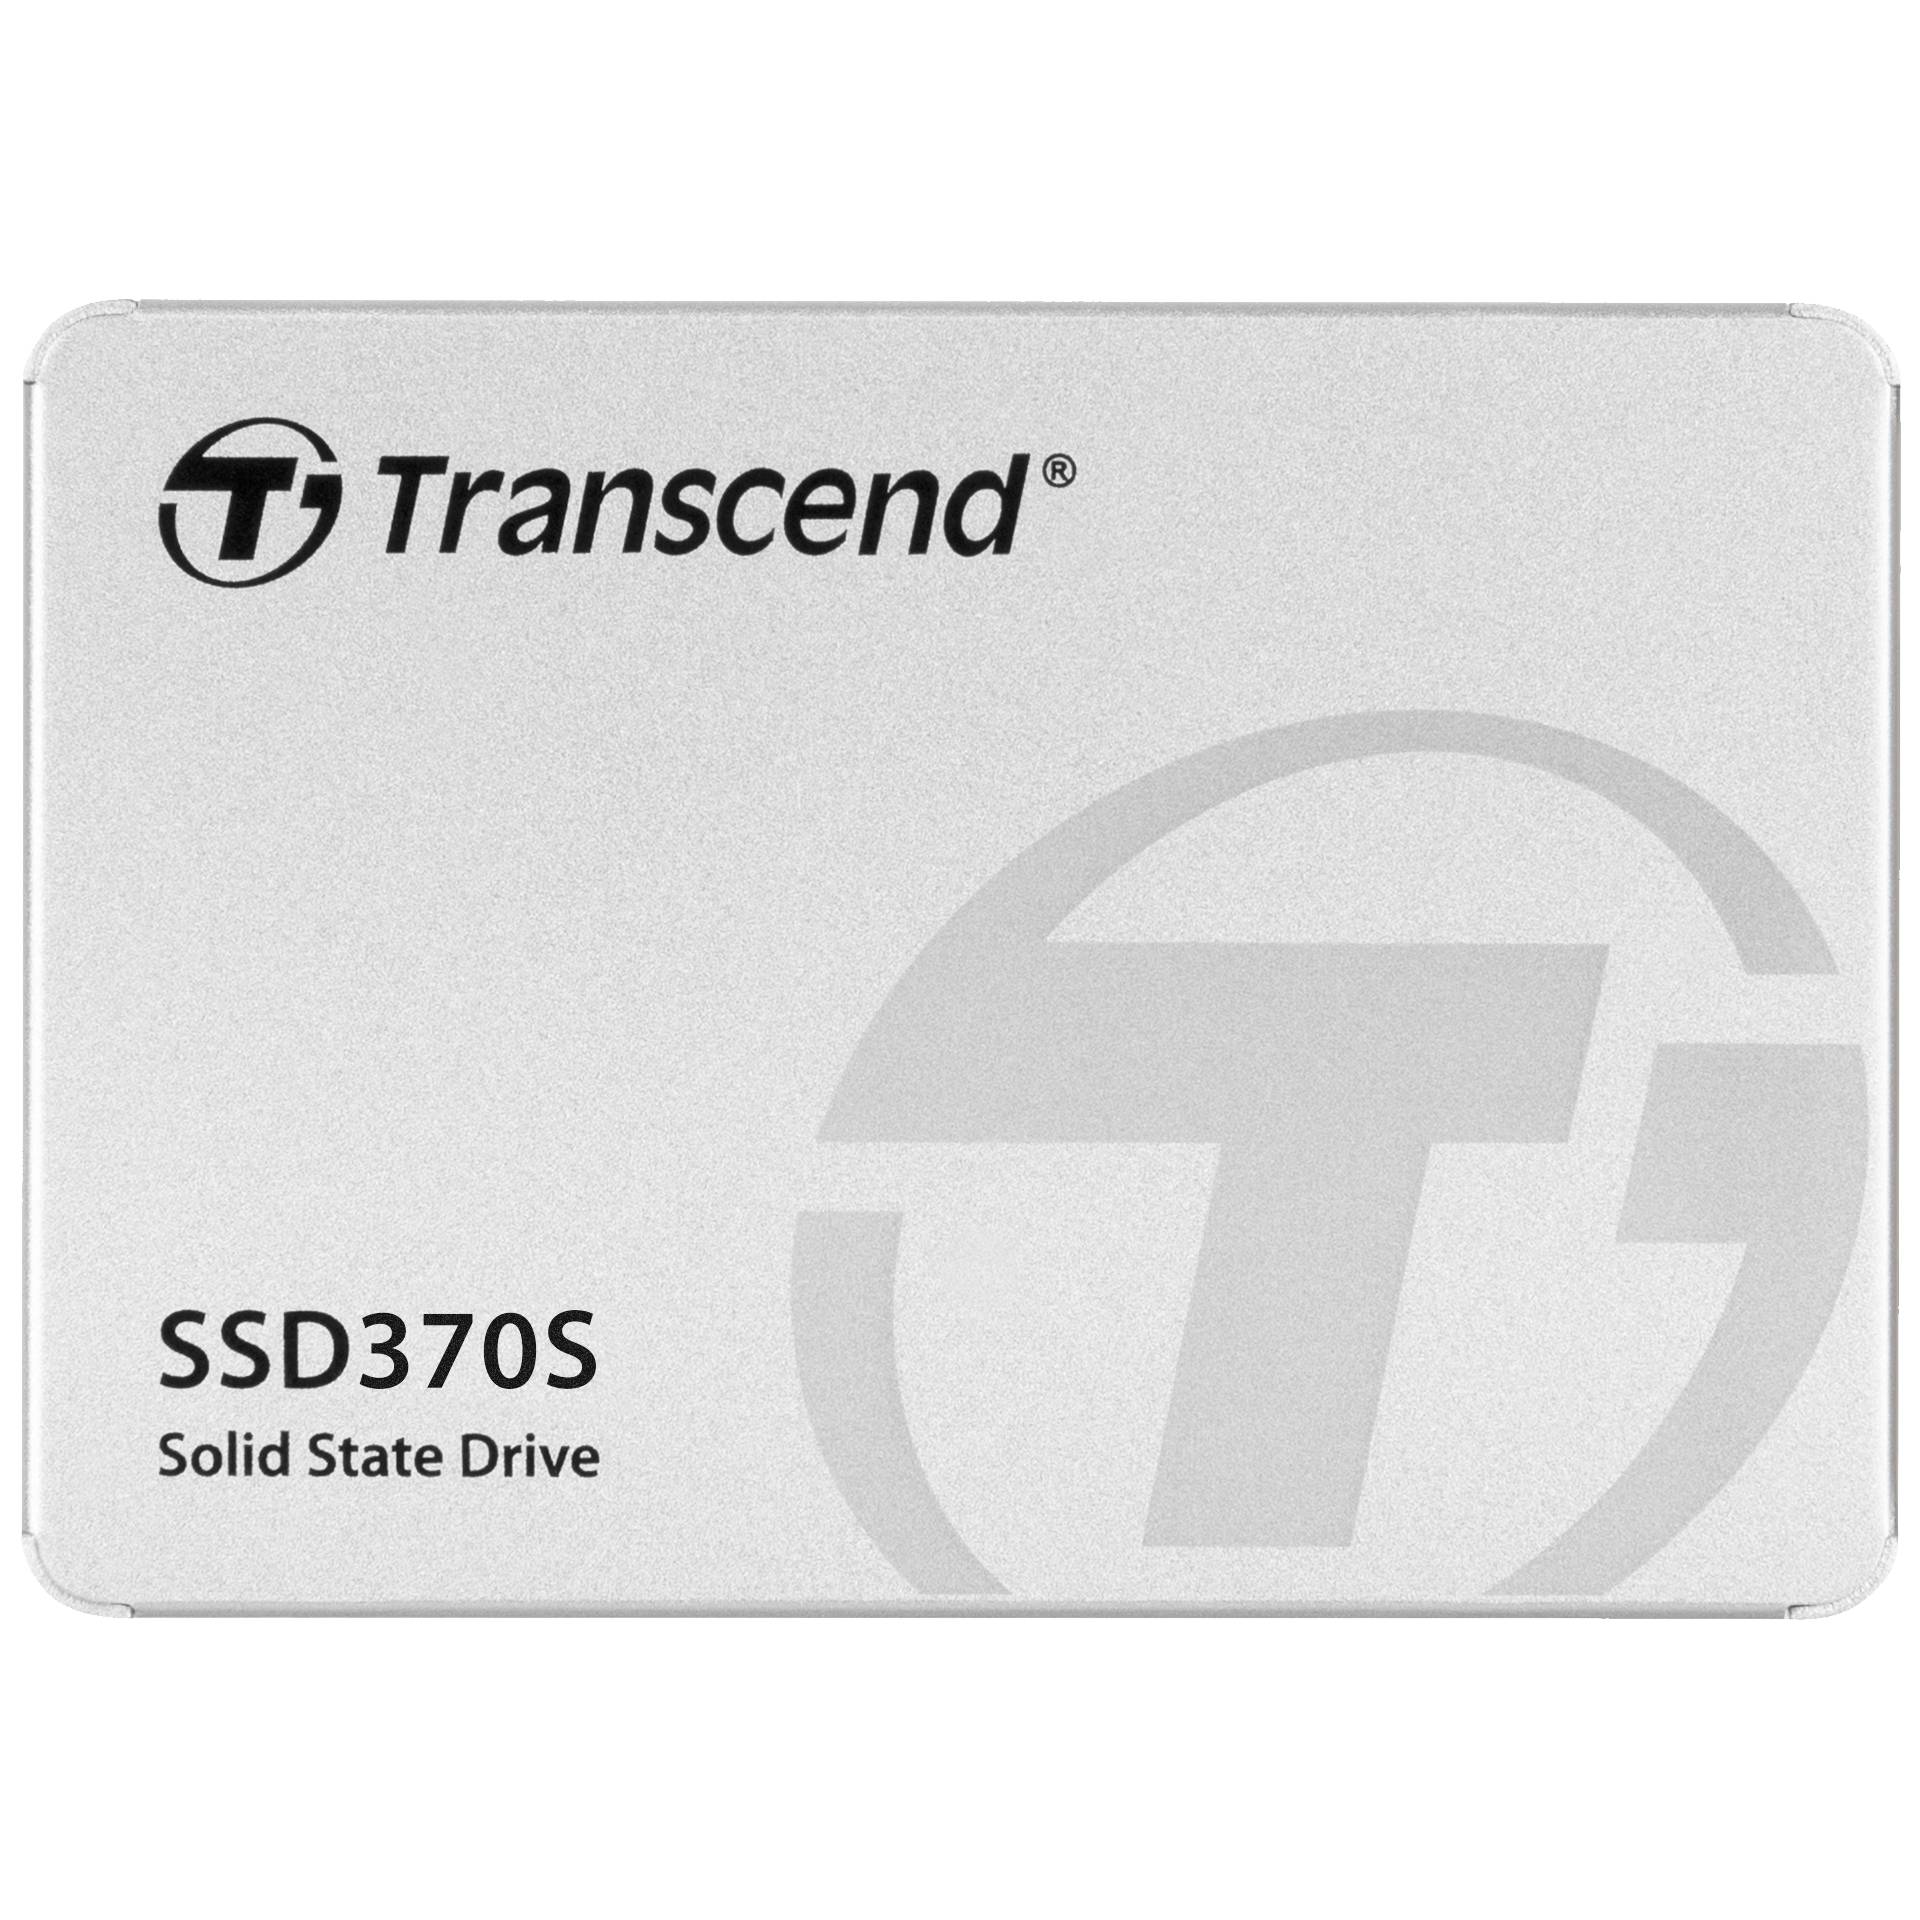 64 GB SSD Transcend 370S, SATA 6Gb/s 6,4cm/ 2.5 Zoll lesen: 520MB/s, schreiben: 90MB/s, TBW: 80TB